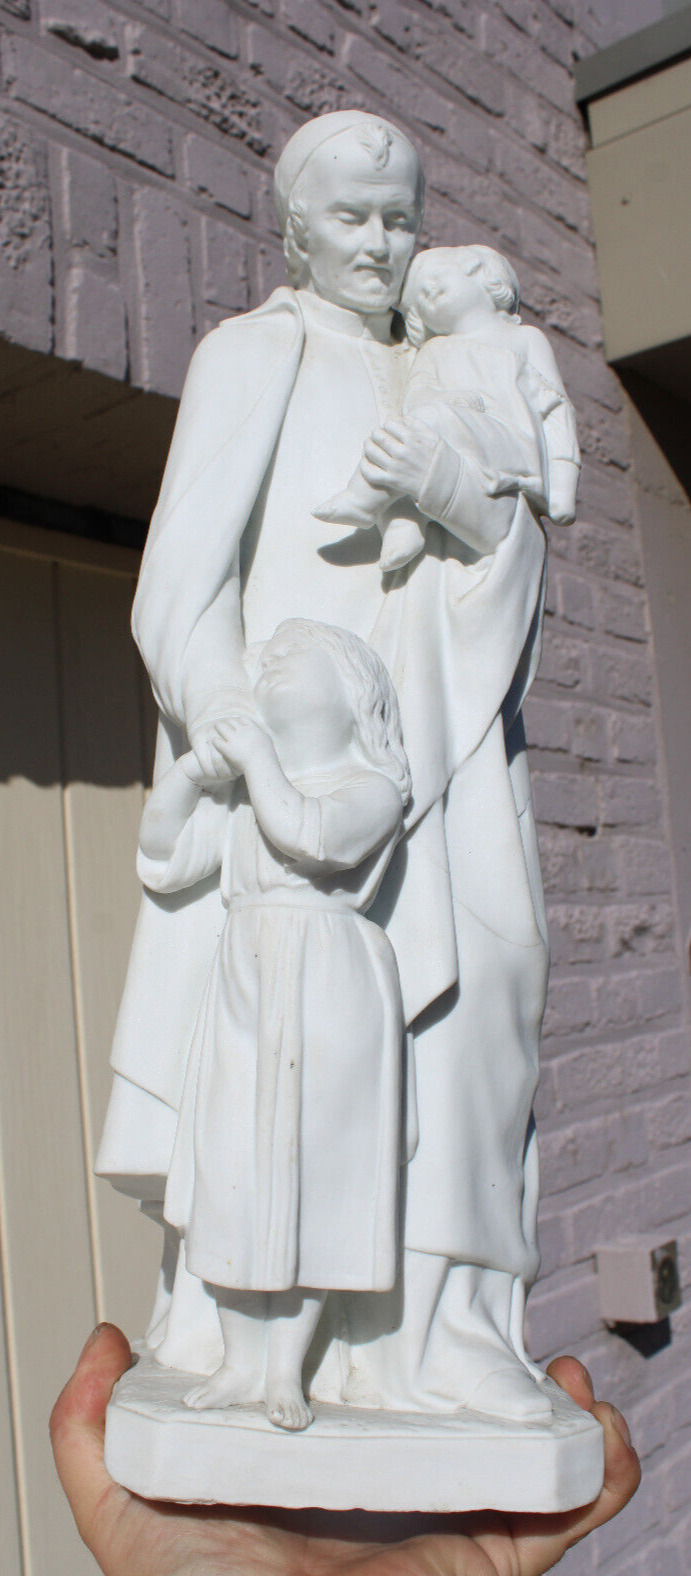 Antique Large Saint Vincentius Bisque porcelain Statue figurine